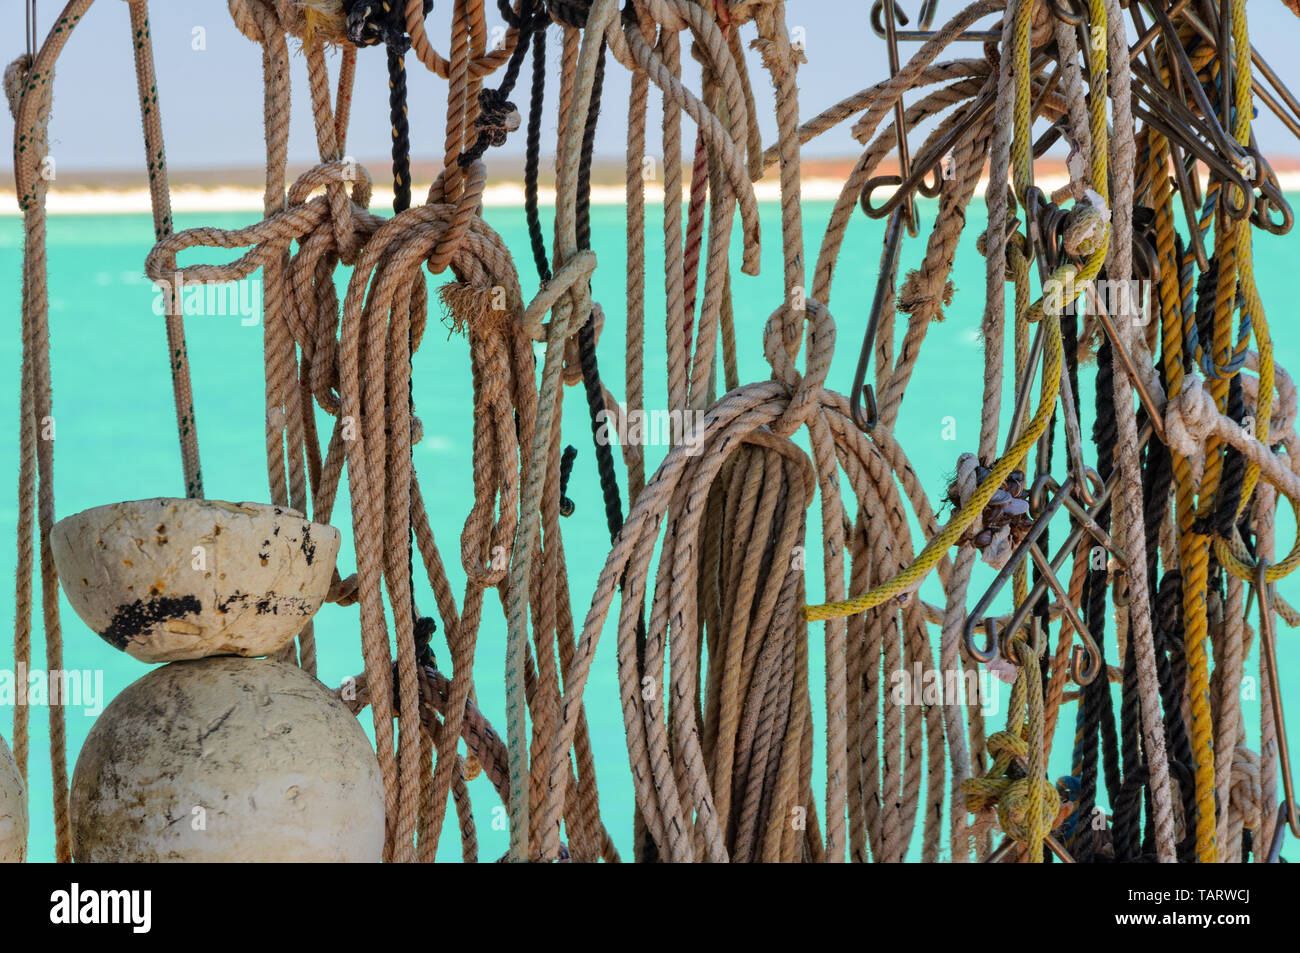 Drying fishing ropes with knots and hooks - Monkey Mia, WA, Australia Stock Photo